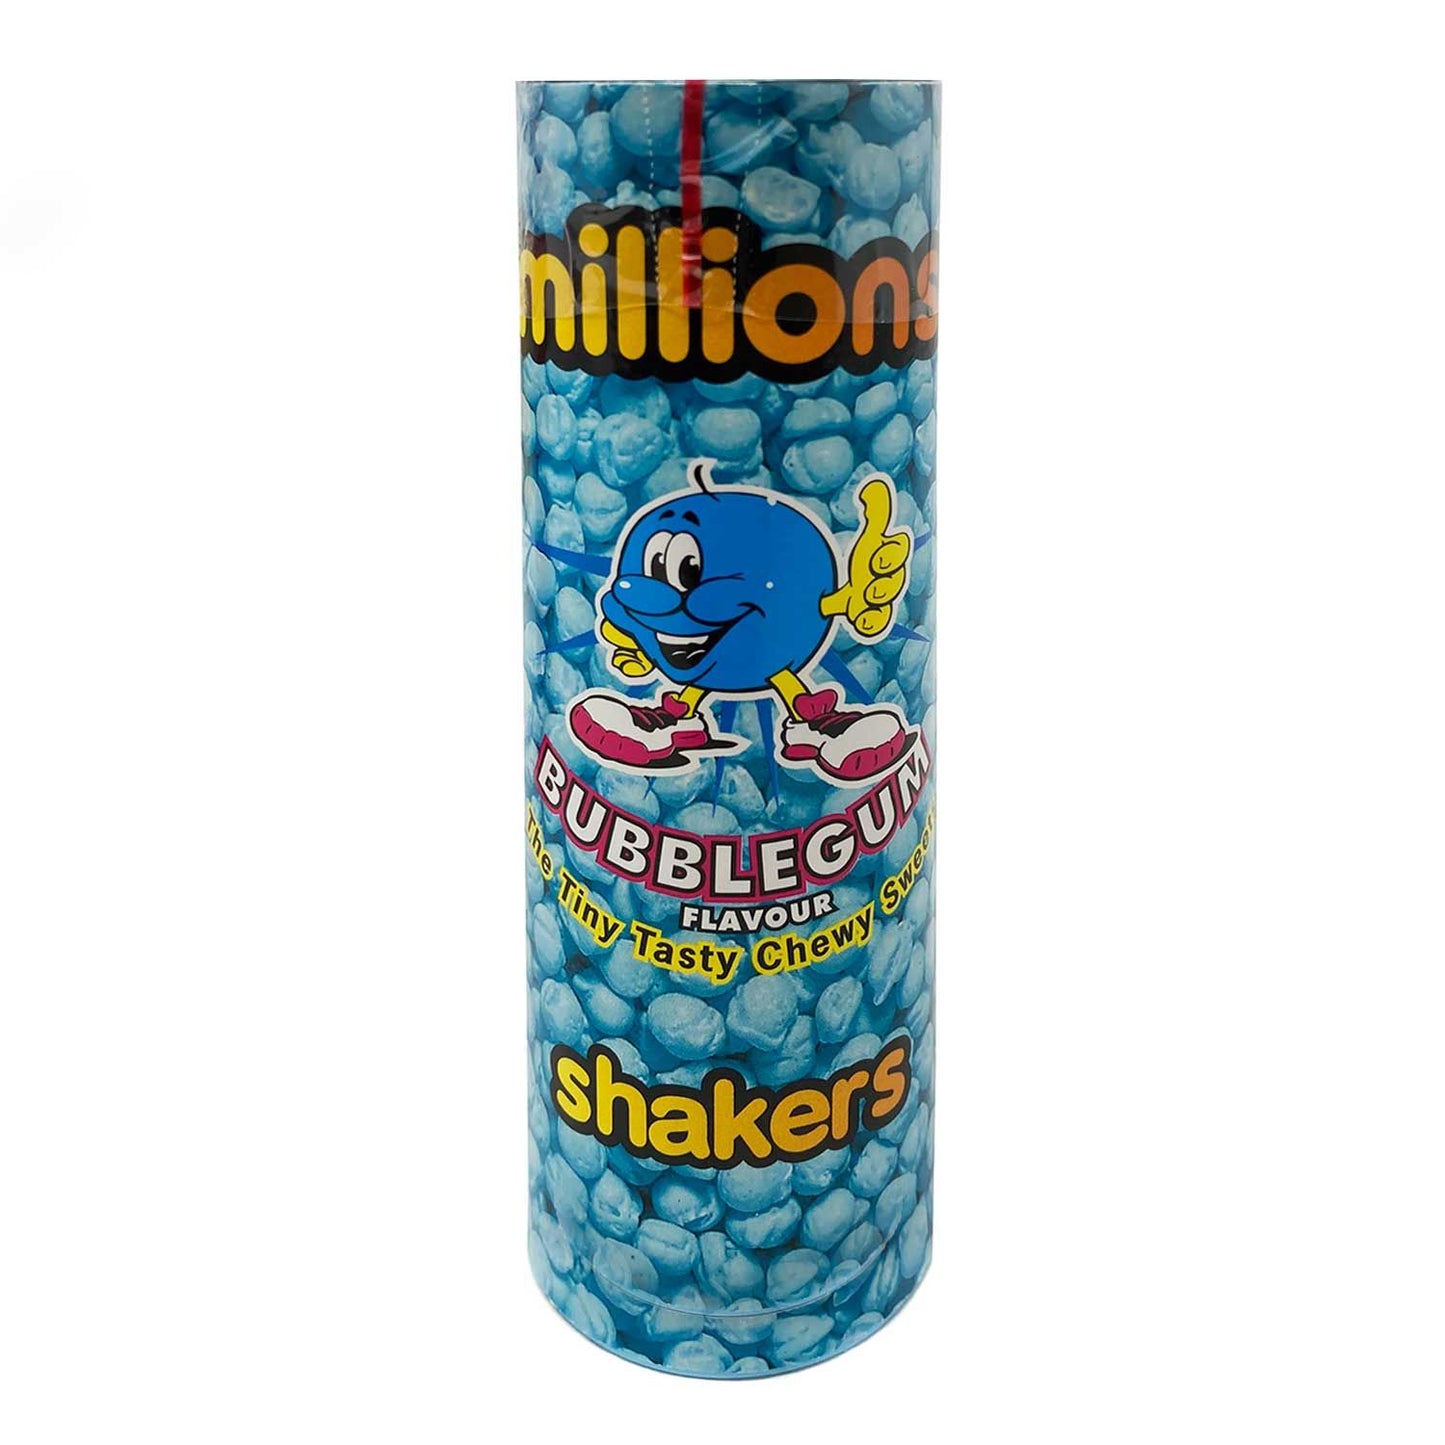 Millions Shakers Bubblegum - 90g